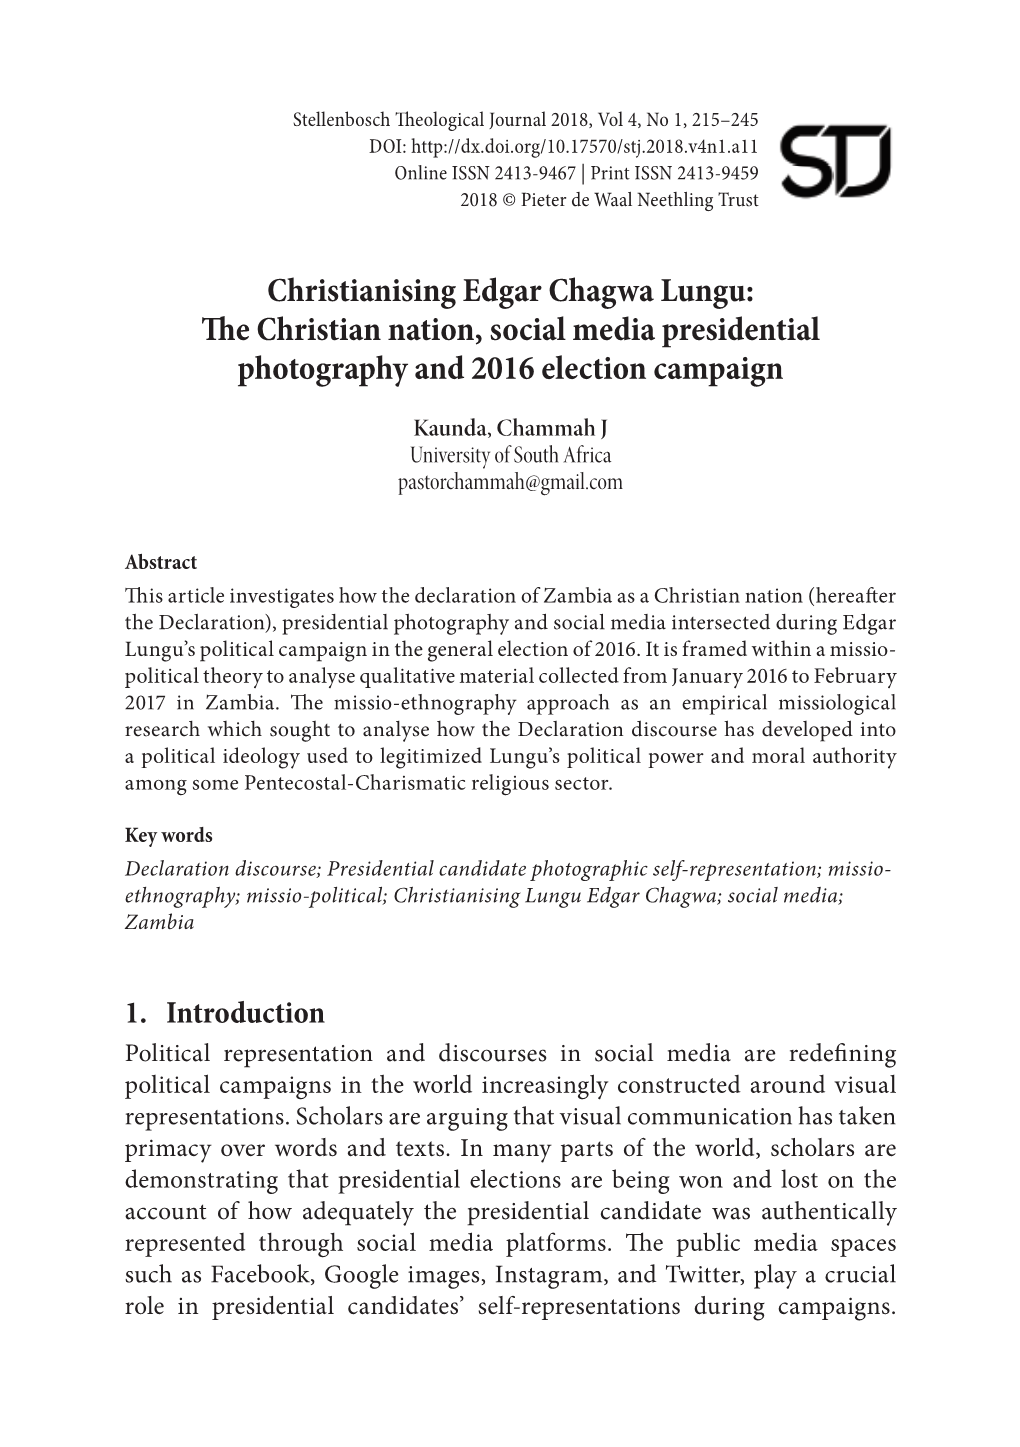 Christianising Edgar Chagwa Lungu: the Christian Nation, Social Media